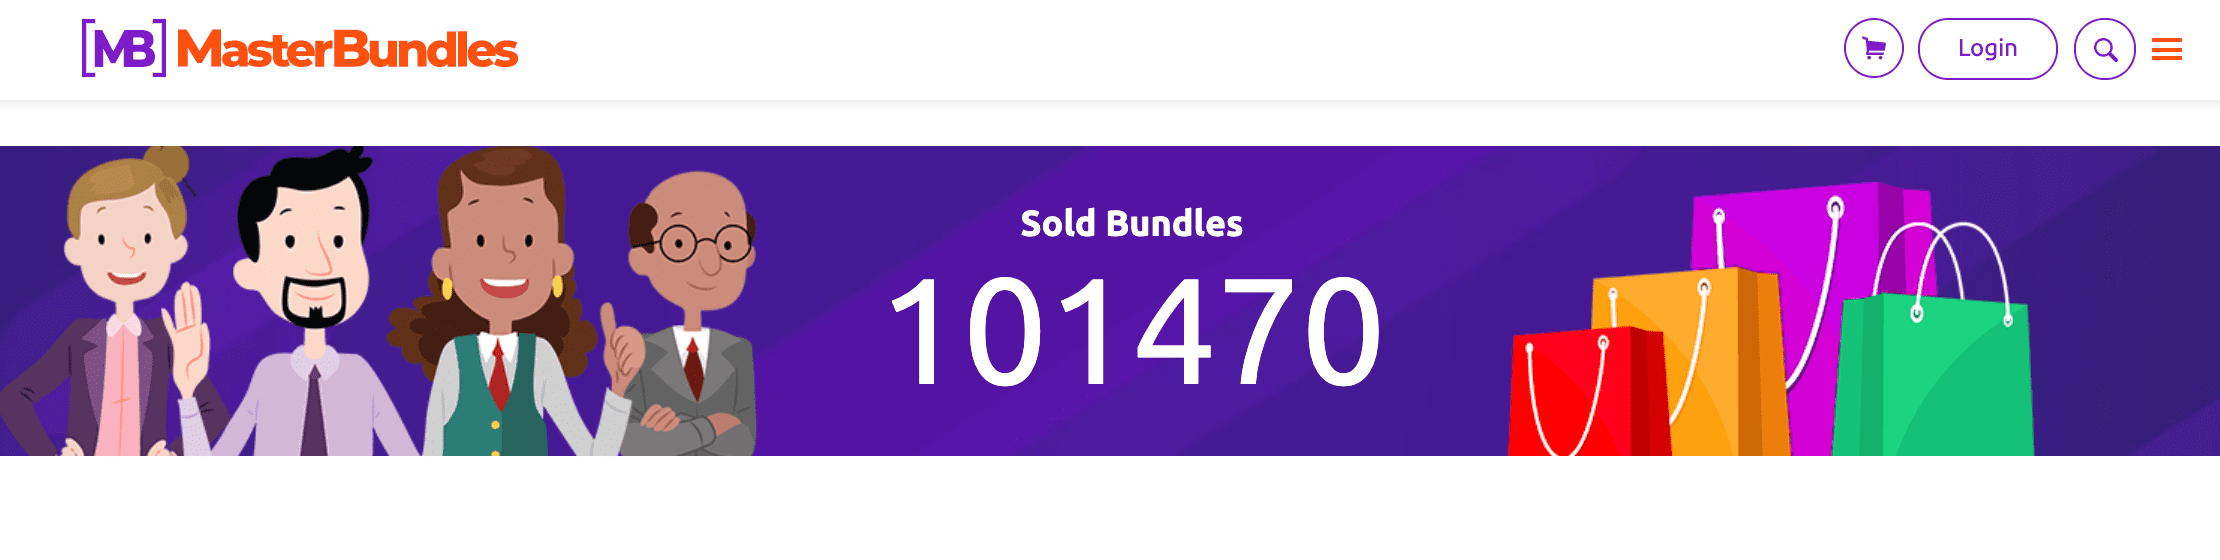 100000 sold bundles. Site screenshot.